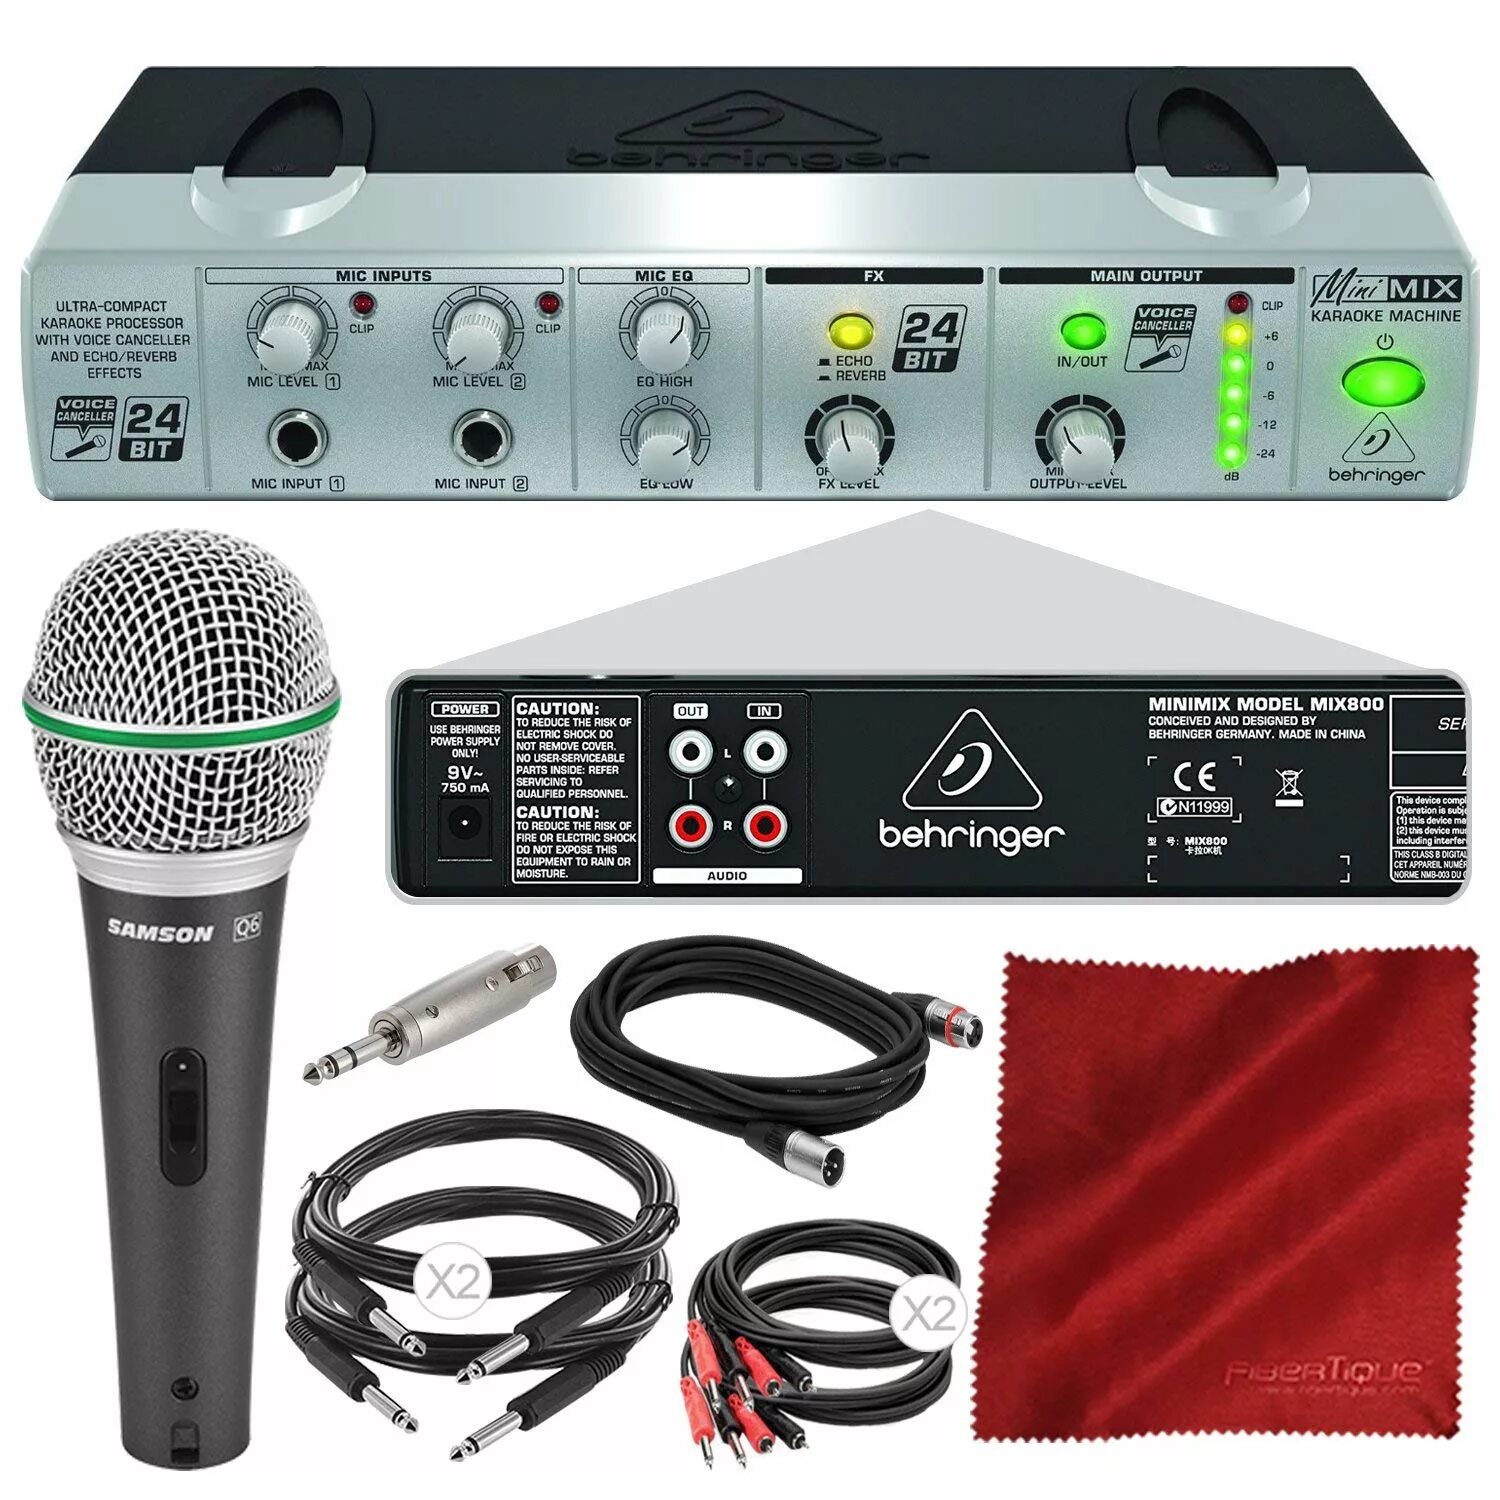 Микрофон Behringer с-4. Behringer Minimix mix800 Ultra-Compact Karaoke Machine with Voice Canceller and FX. Микрофон парный Behringer. EW-800 караоке. Рейтинг караоке колонок